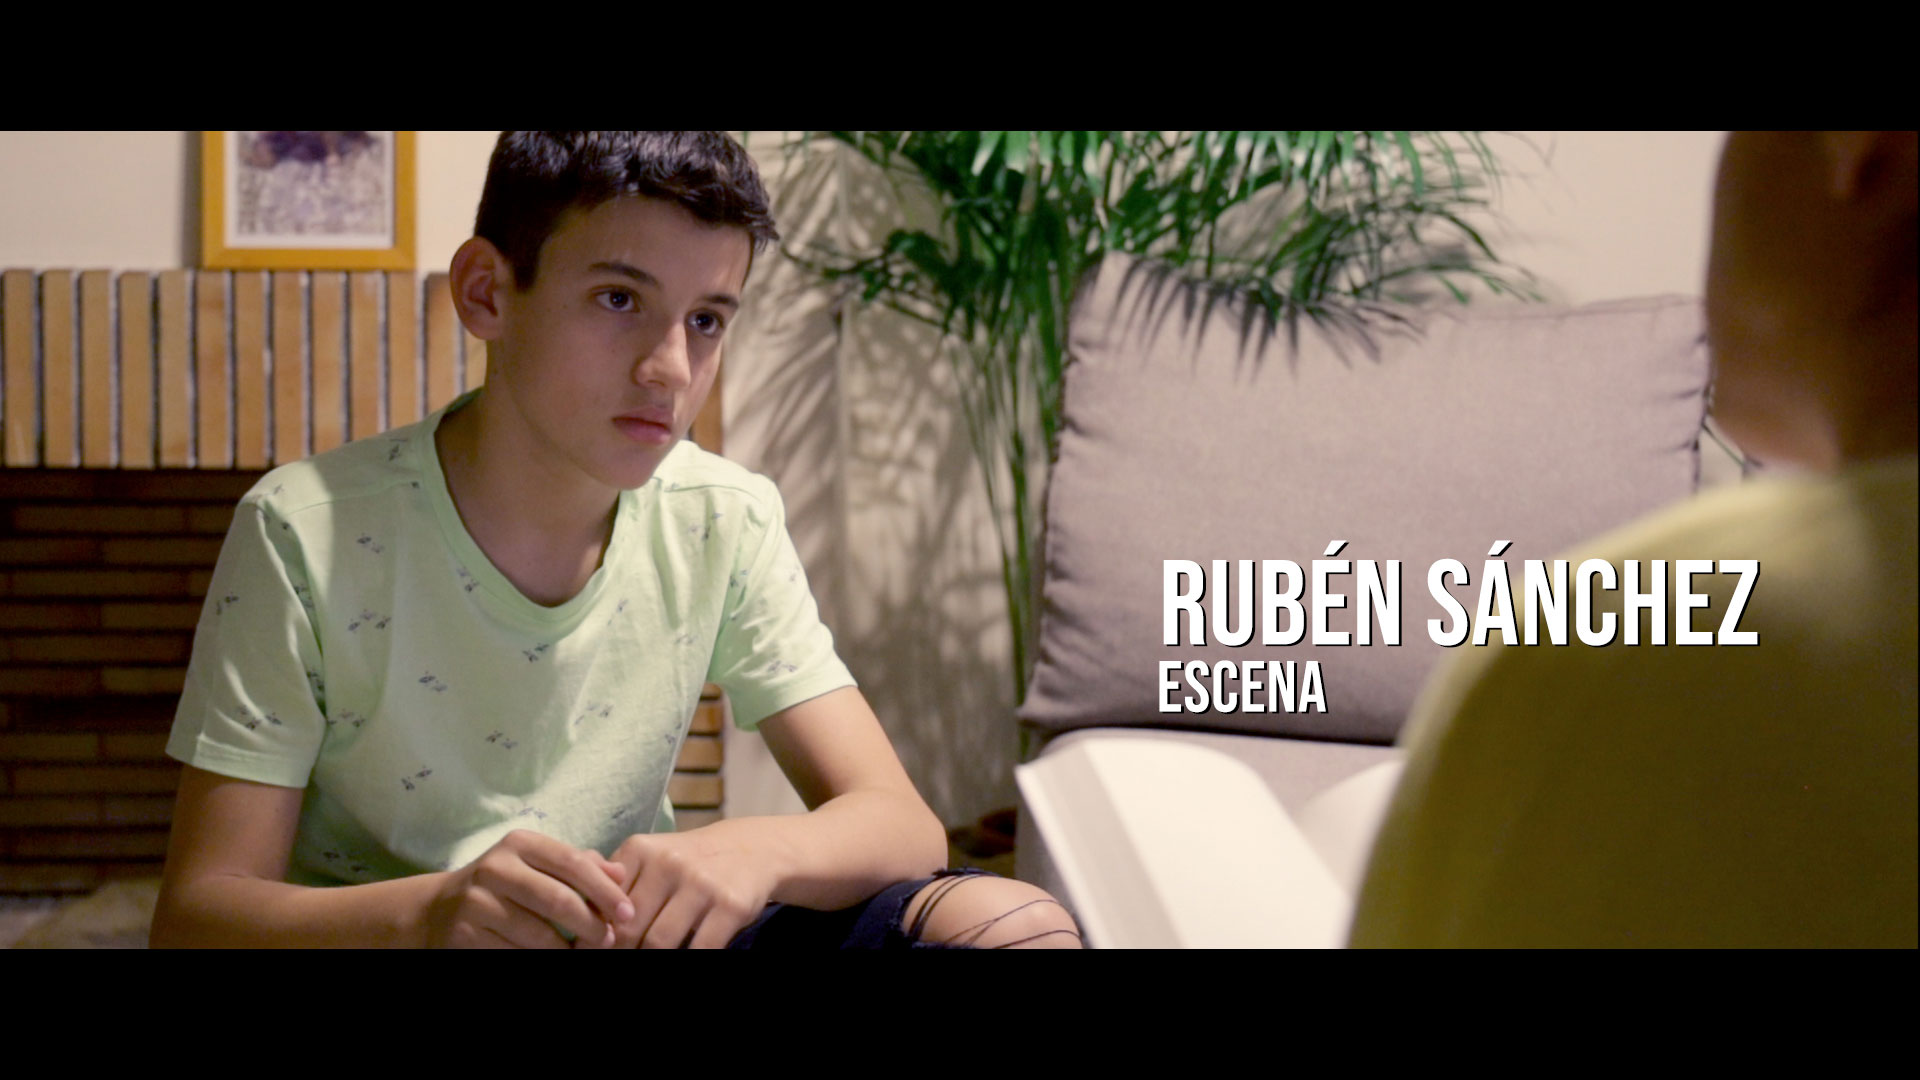 Rubén Sánchez - Escena Actor